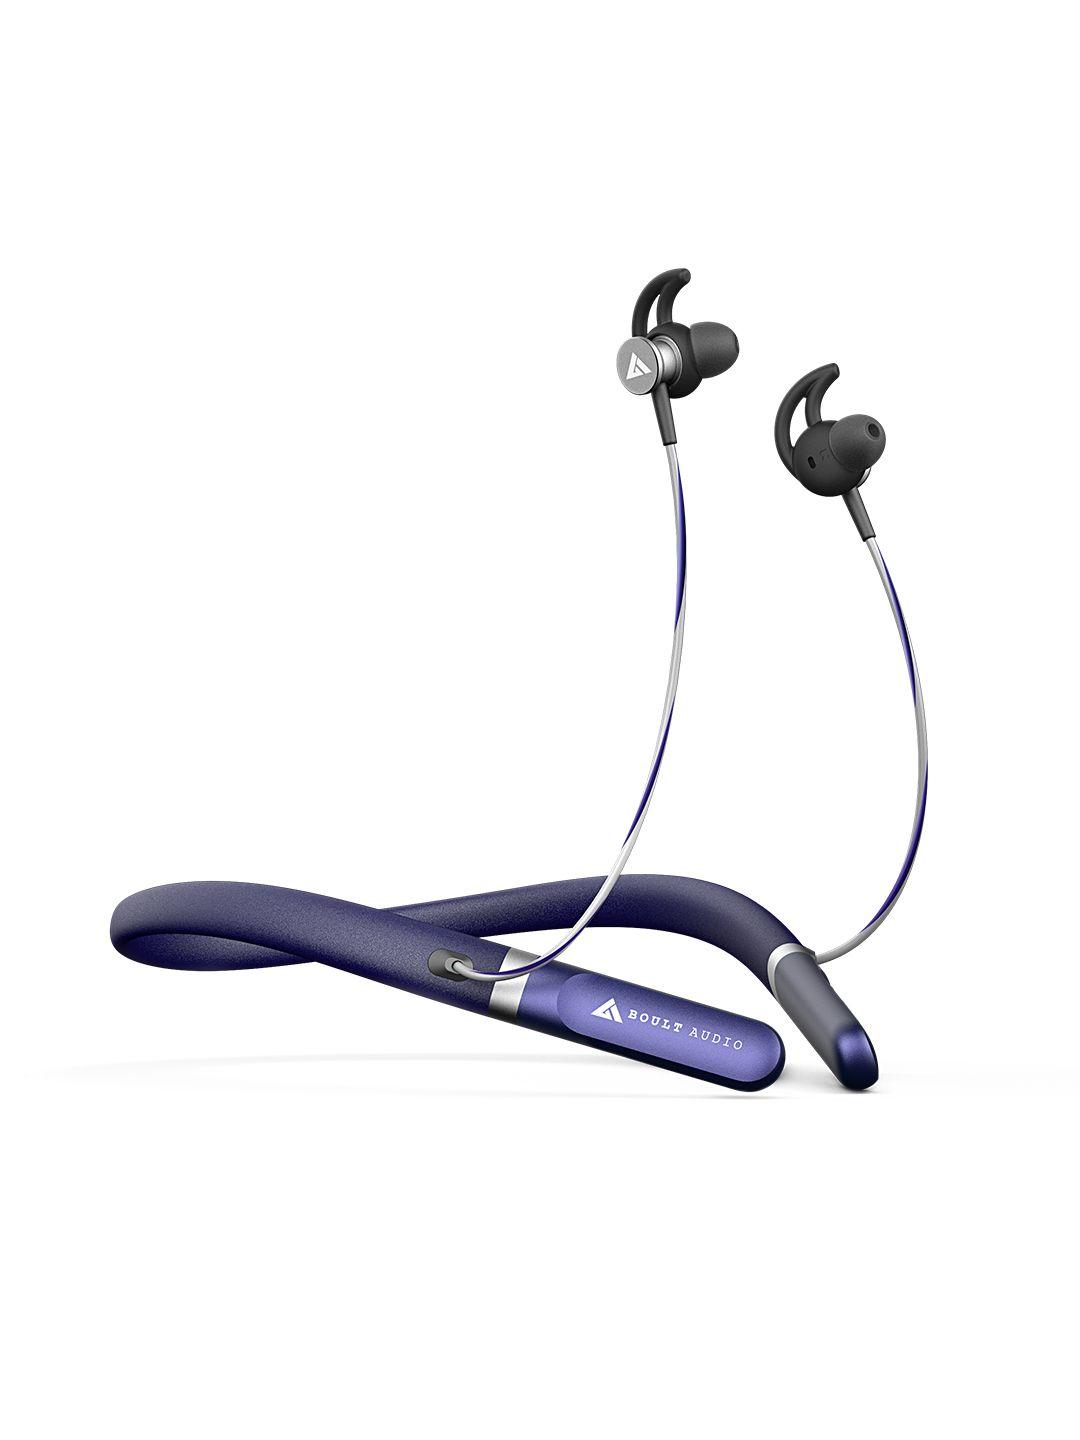 boult audio blue probass fcharge in-ear wireless bluetooth earphones